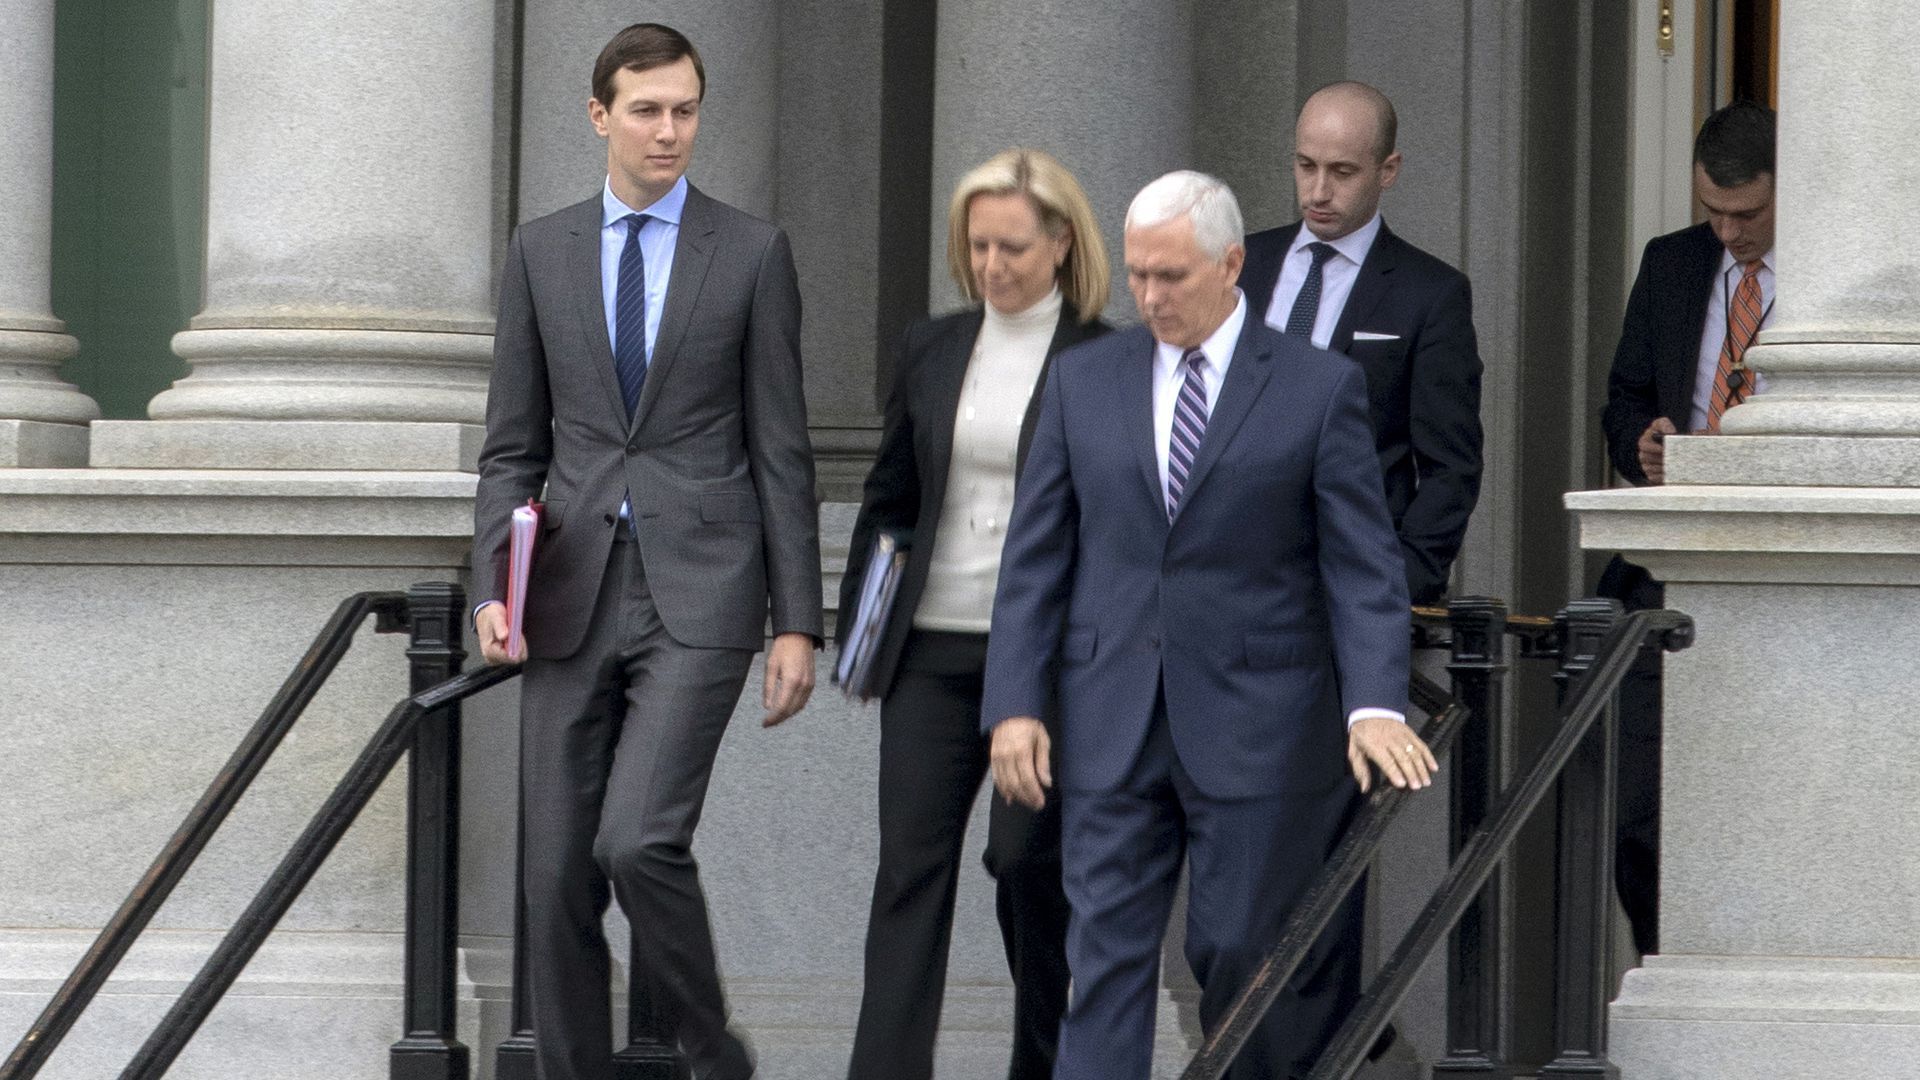 Jared Kushner walks down stairs followed by Mike Pence, Kirstjen Nielsen and Stephen Miller